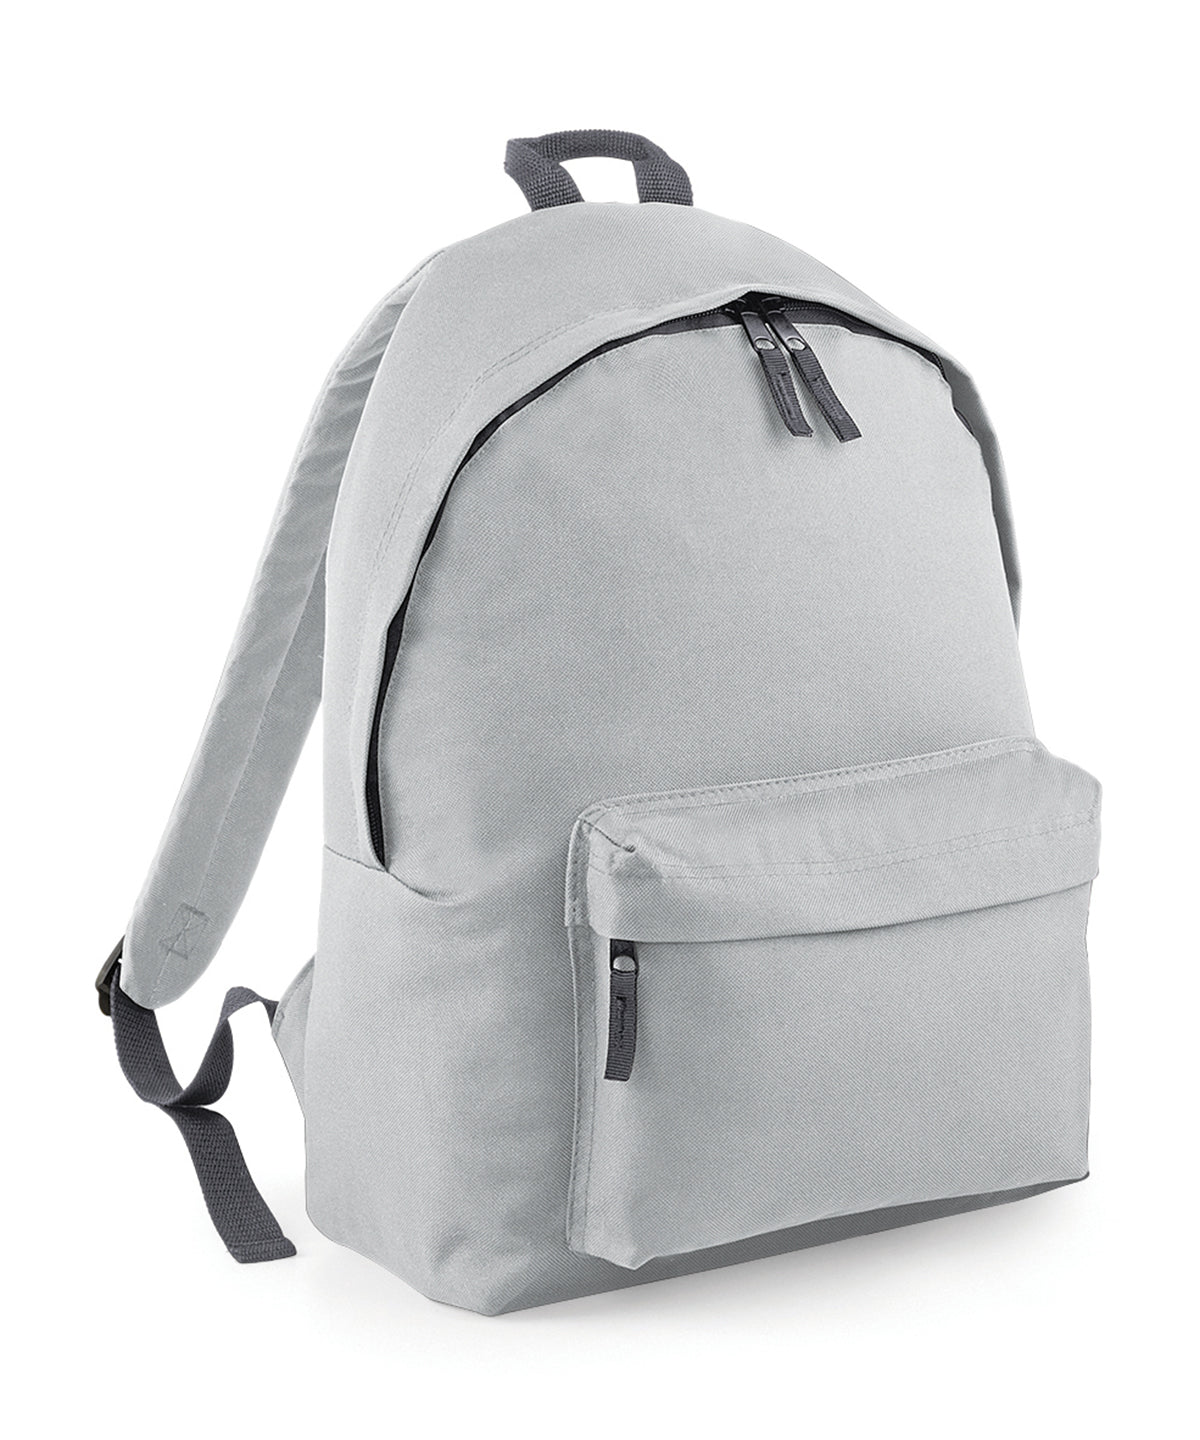 Personalised Bags - Light Grey Bagbase Original fashion backpack